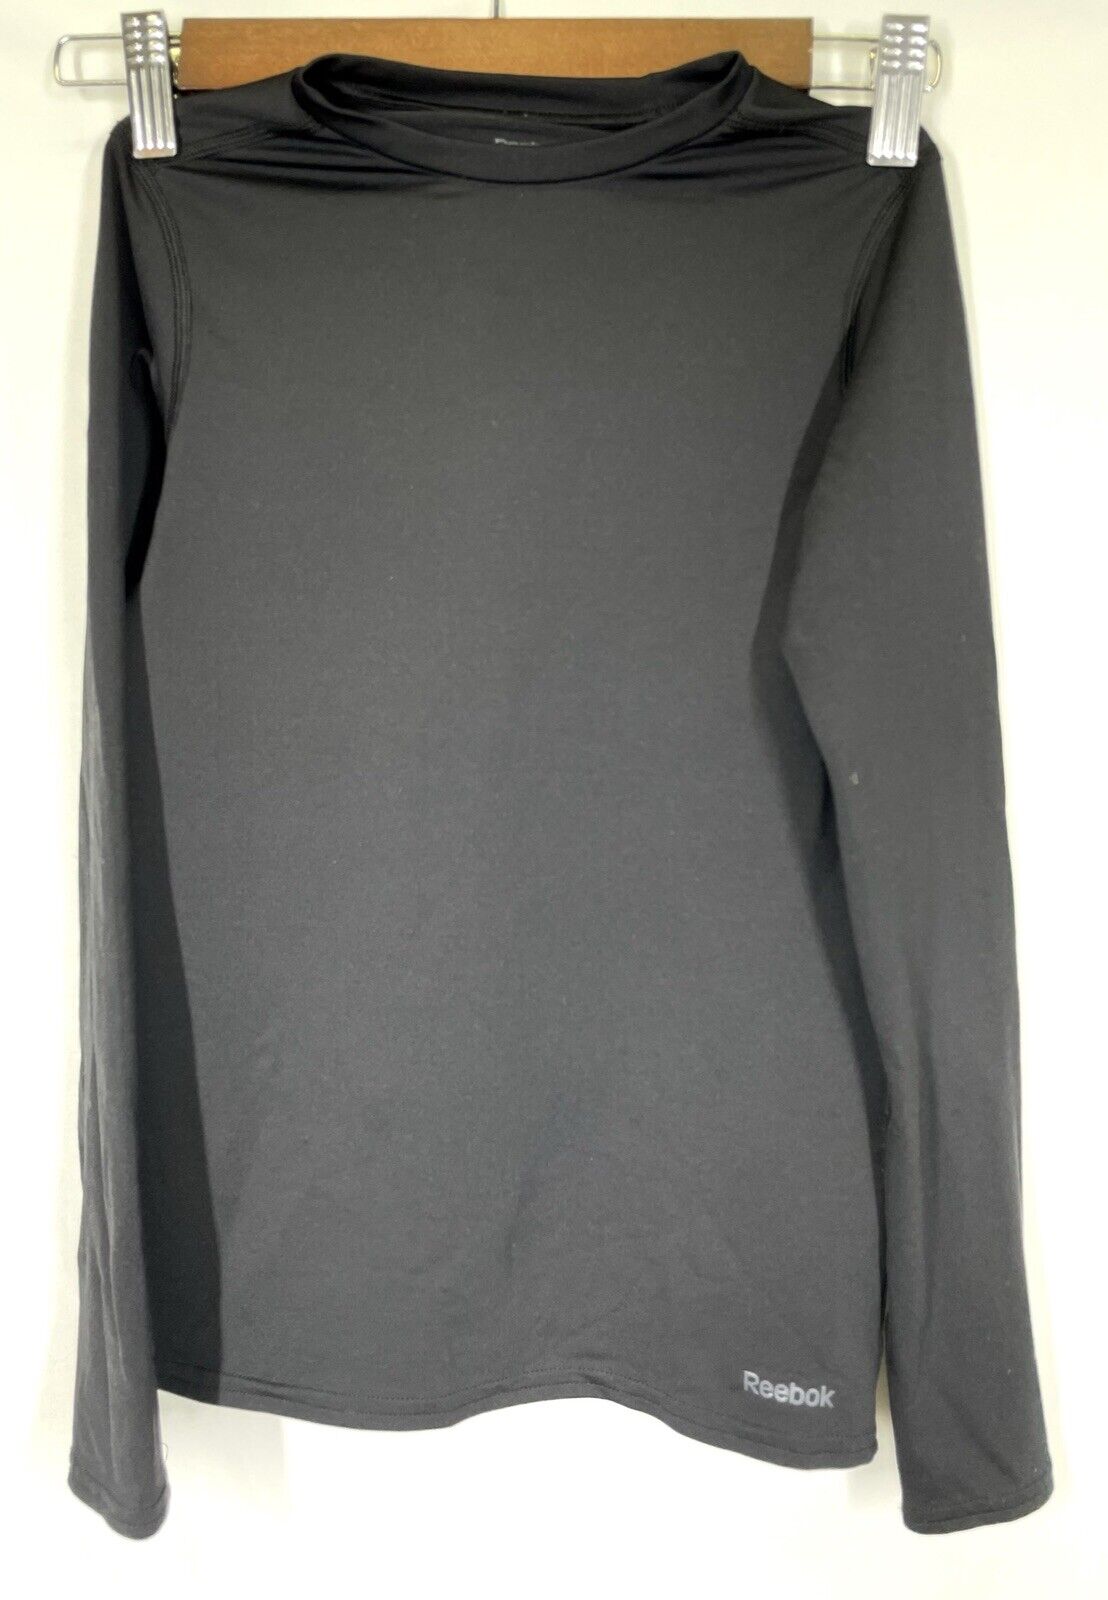 Reebok Youth Boys Athletic Compression Long Sleeve Shirt Black Medium M Cold